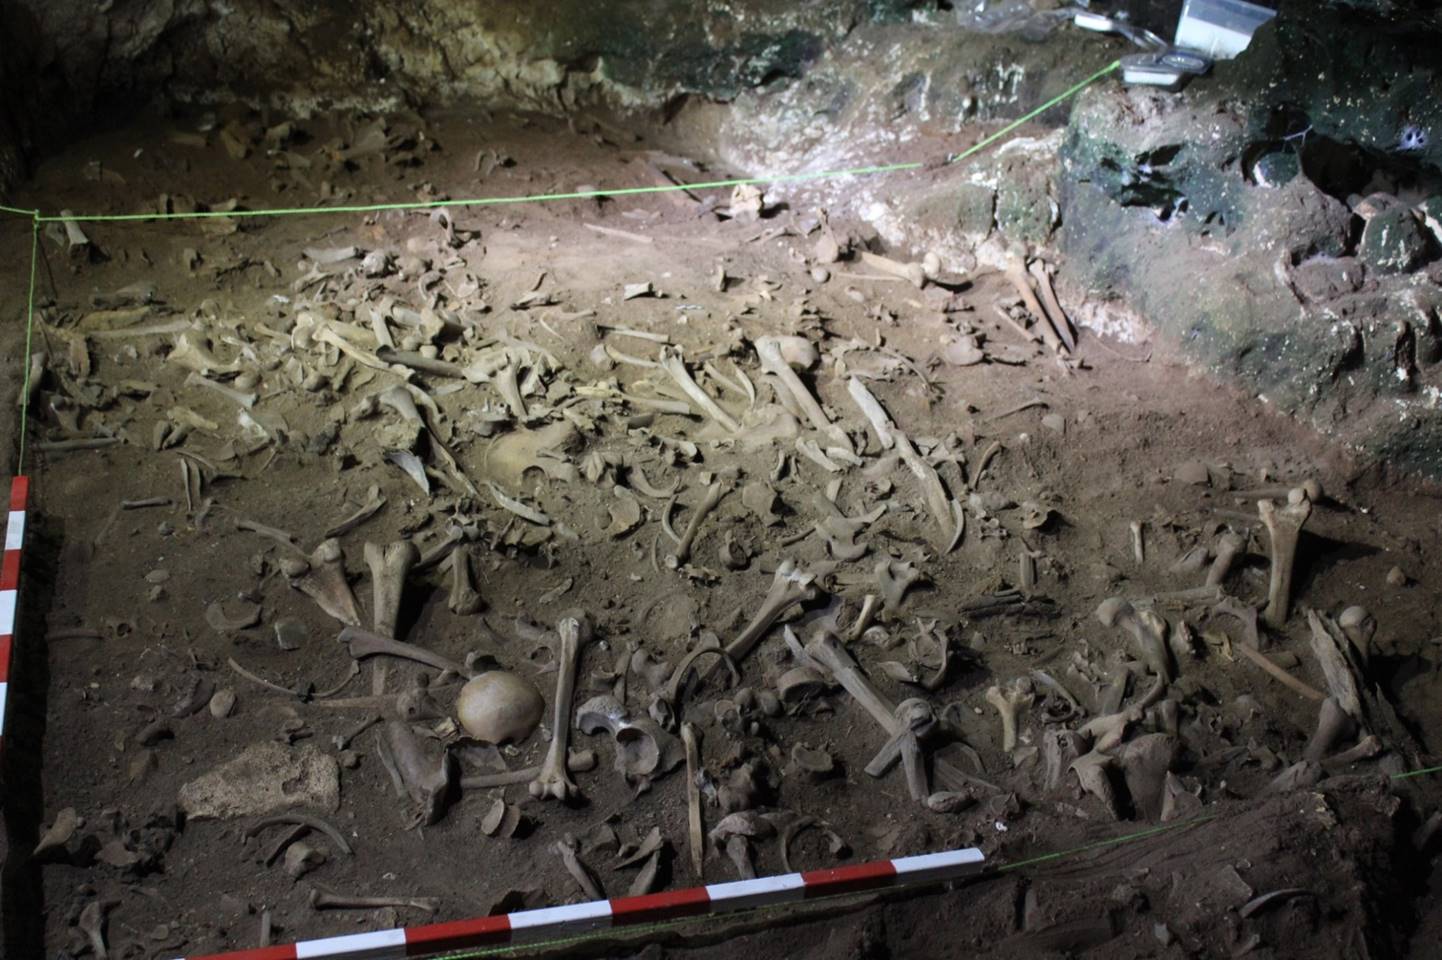 Remains discovered in Biniadris Cave (Menorca)